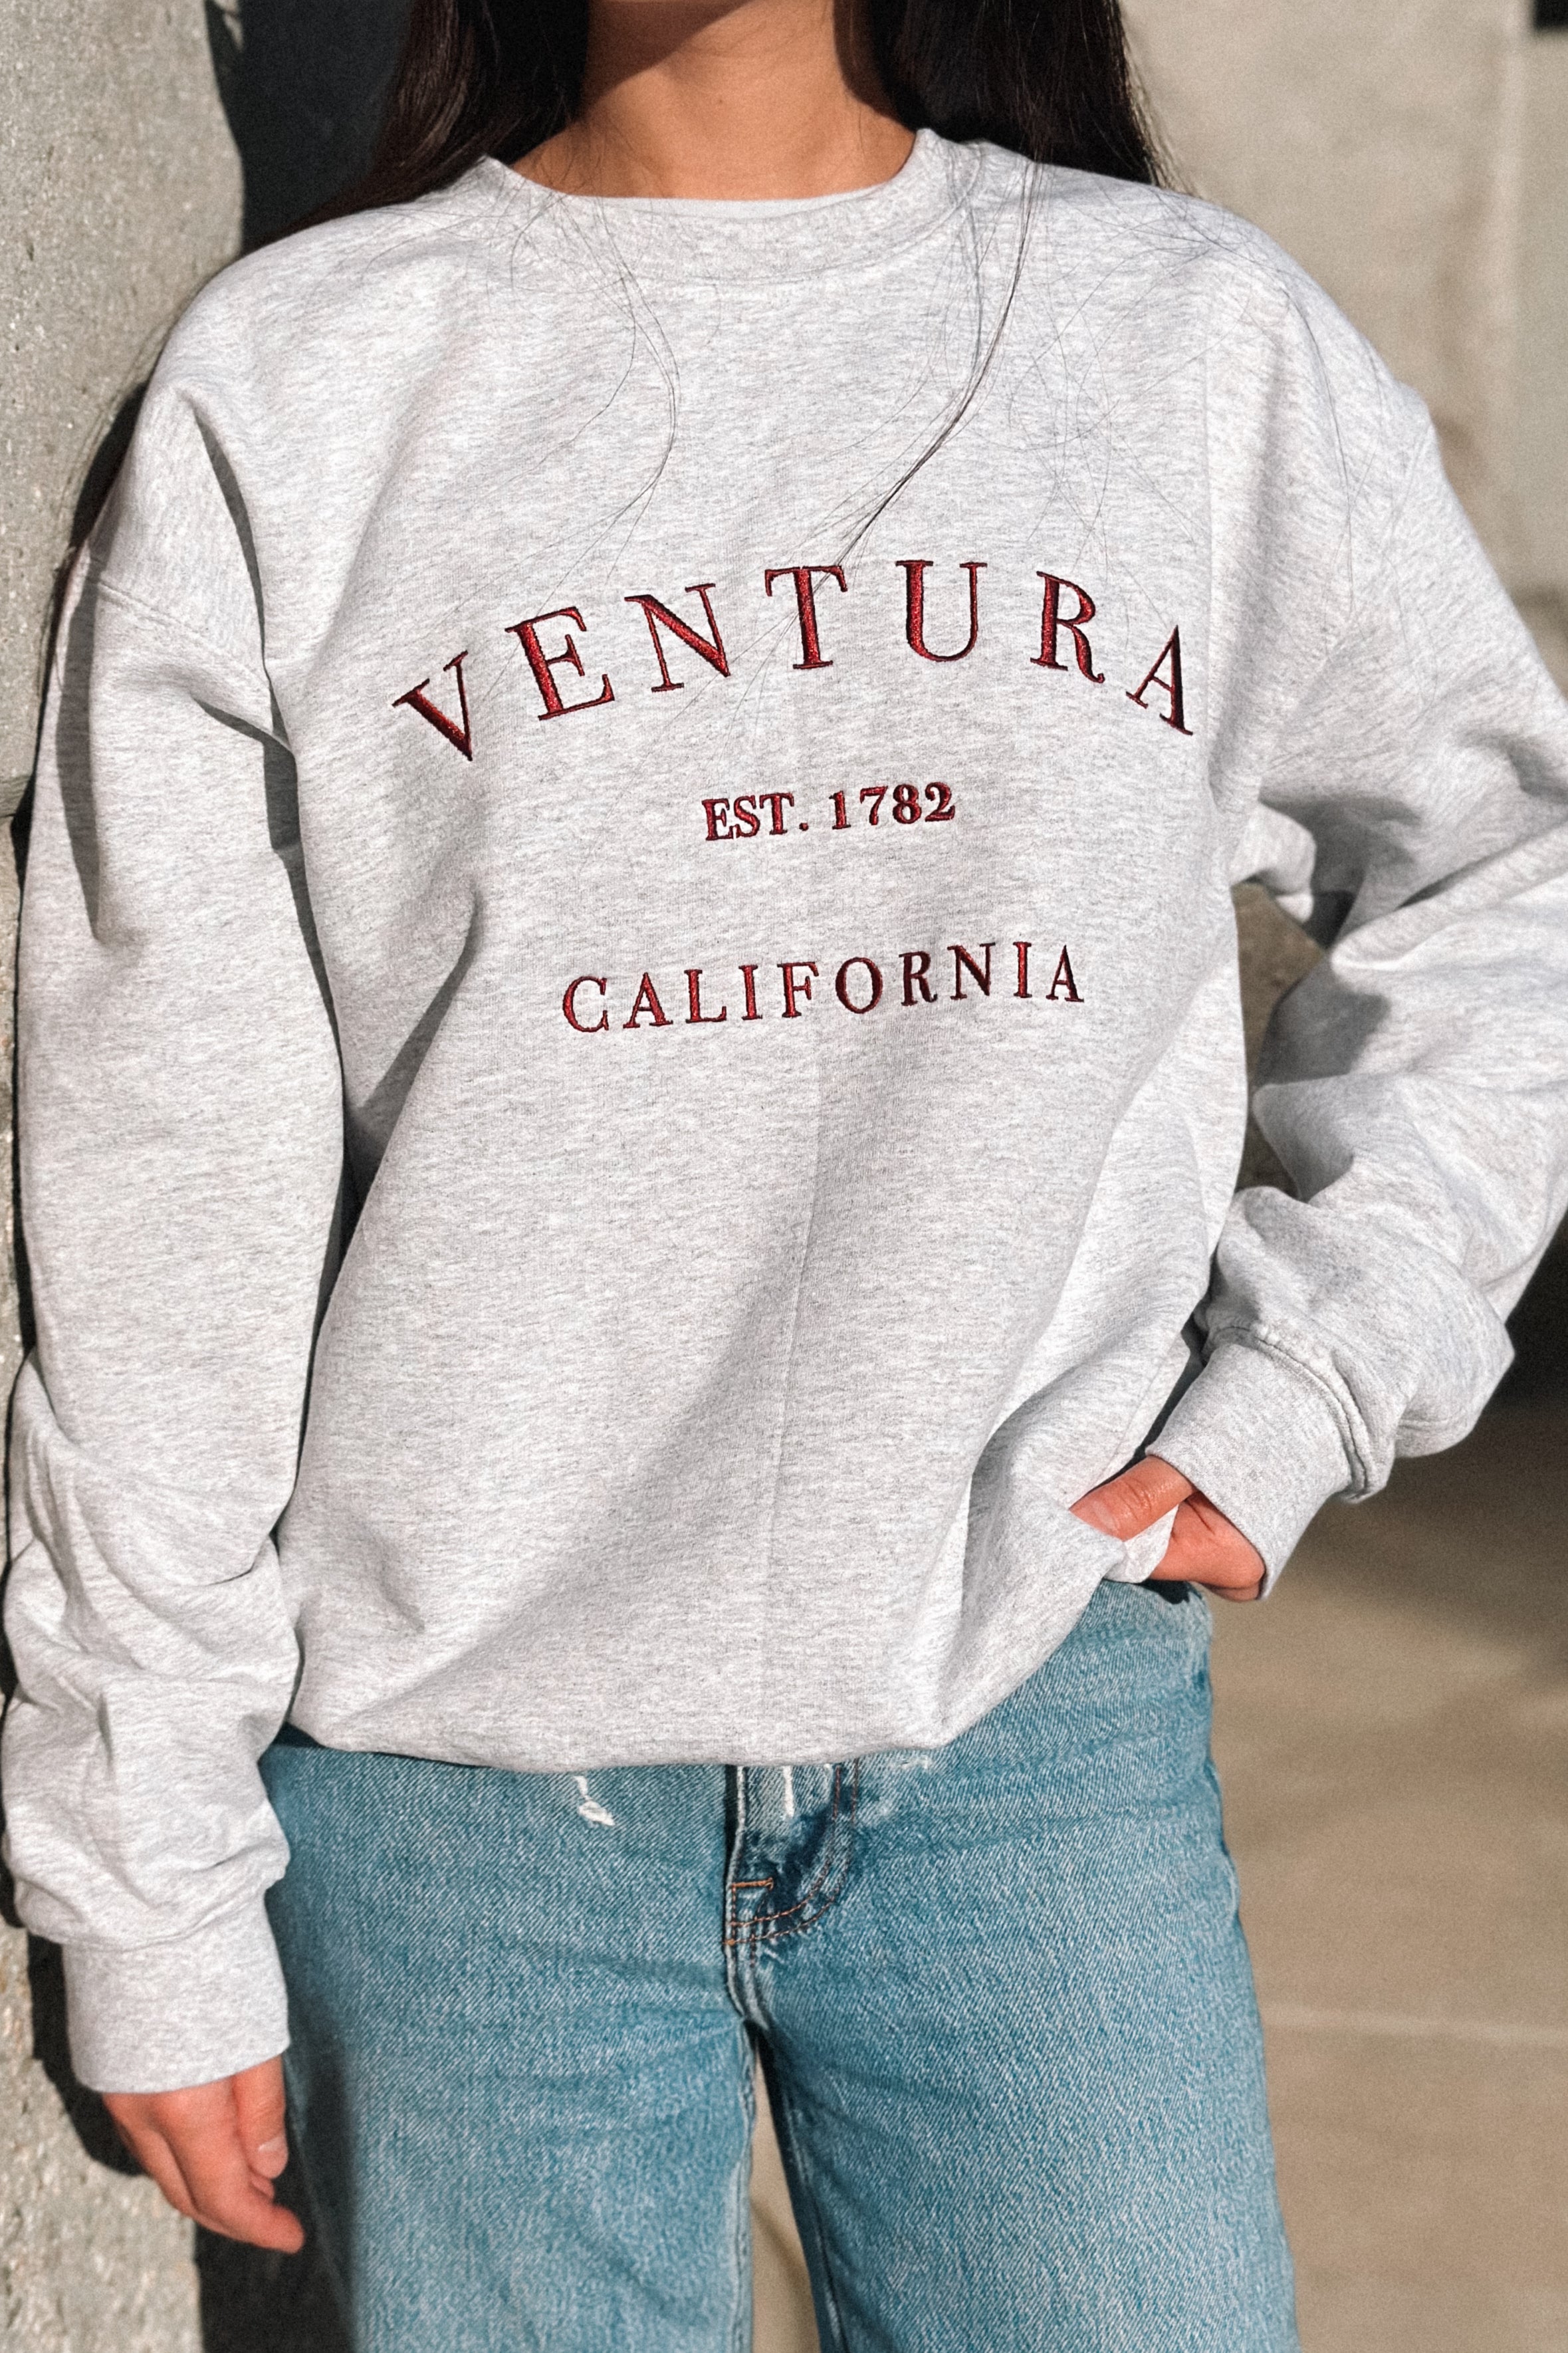 Ventura EST. 1782 Sweatshirt (Grey/Burgundy)